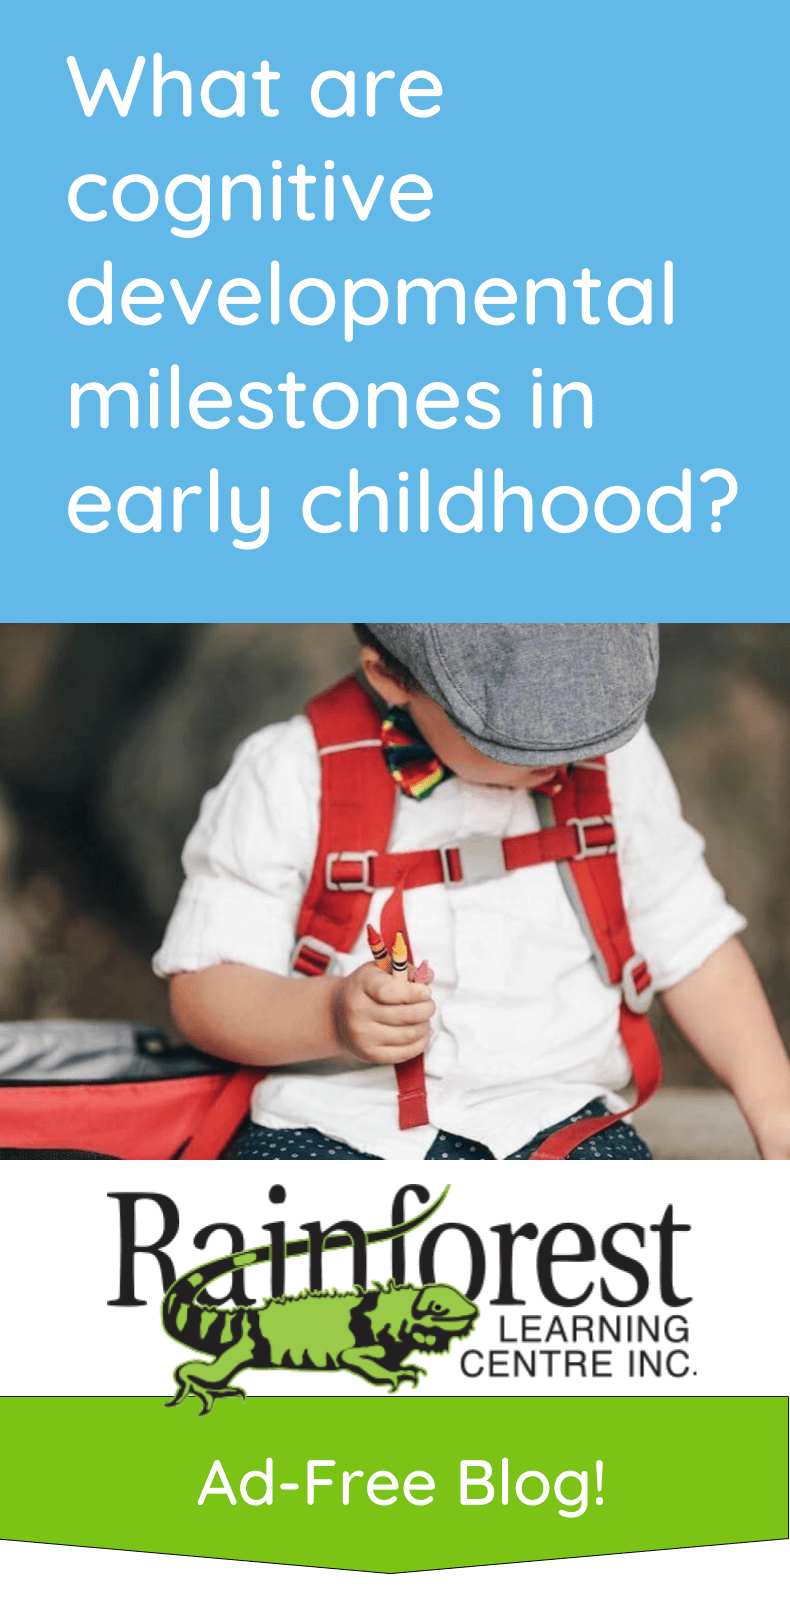 Cognitive developmental milestones in early childhood - article pinterest image